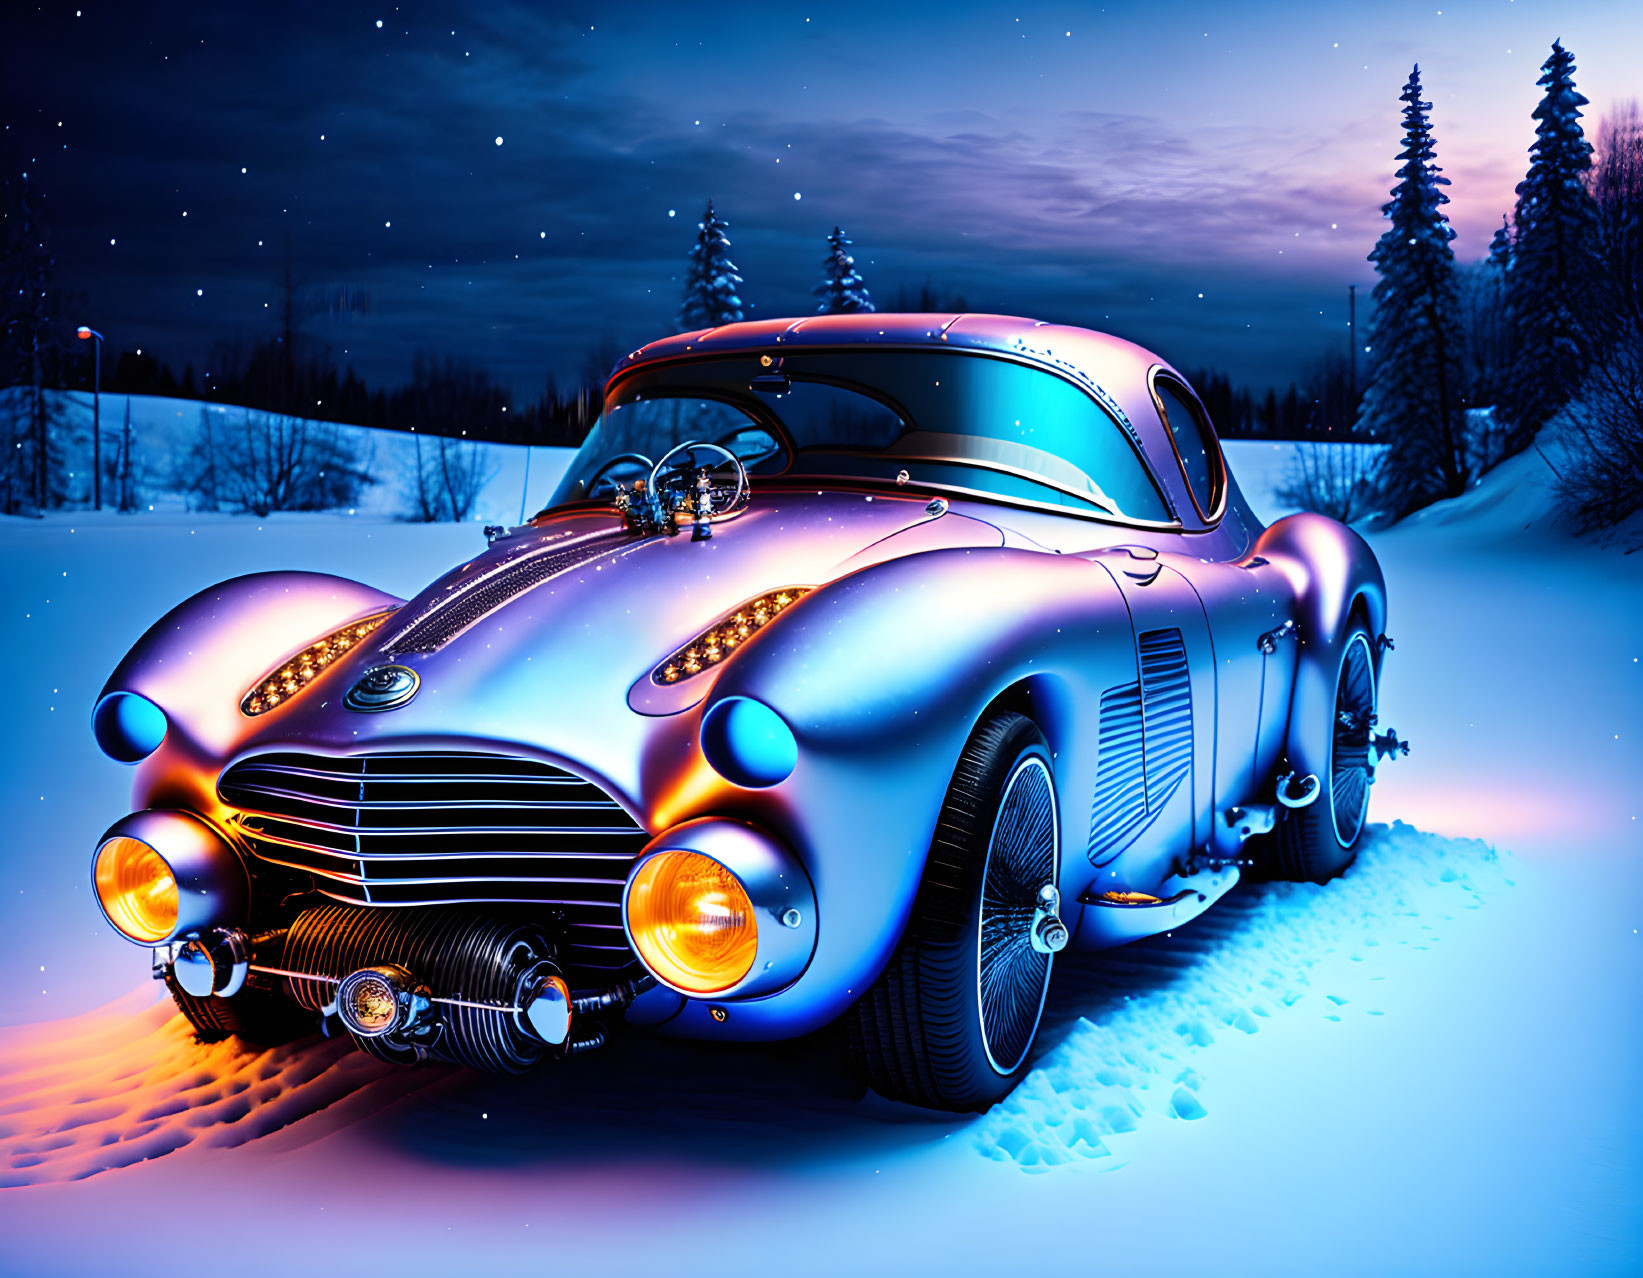 Steampunk Sports Car In Winter